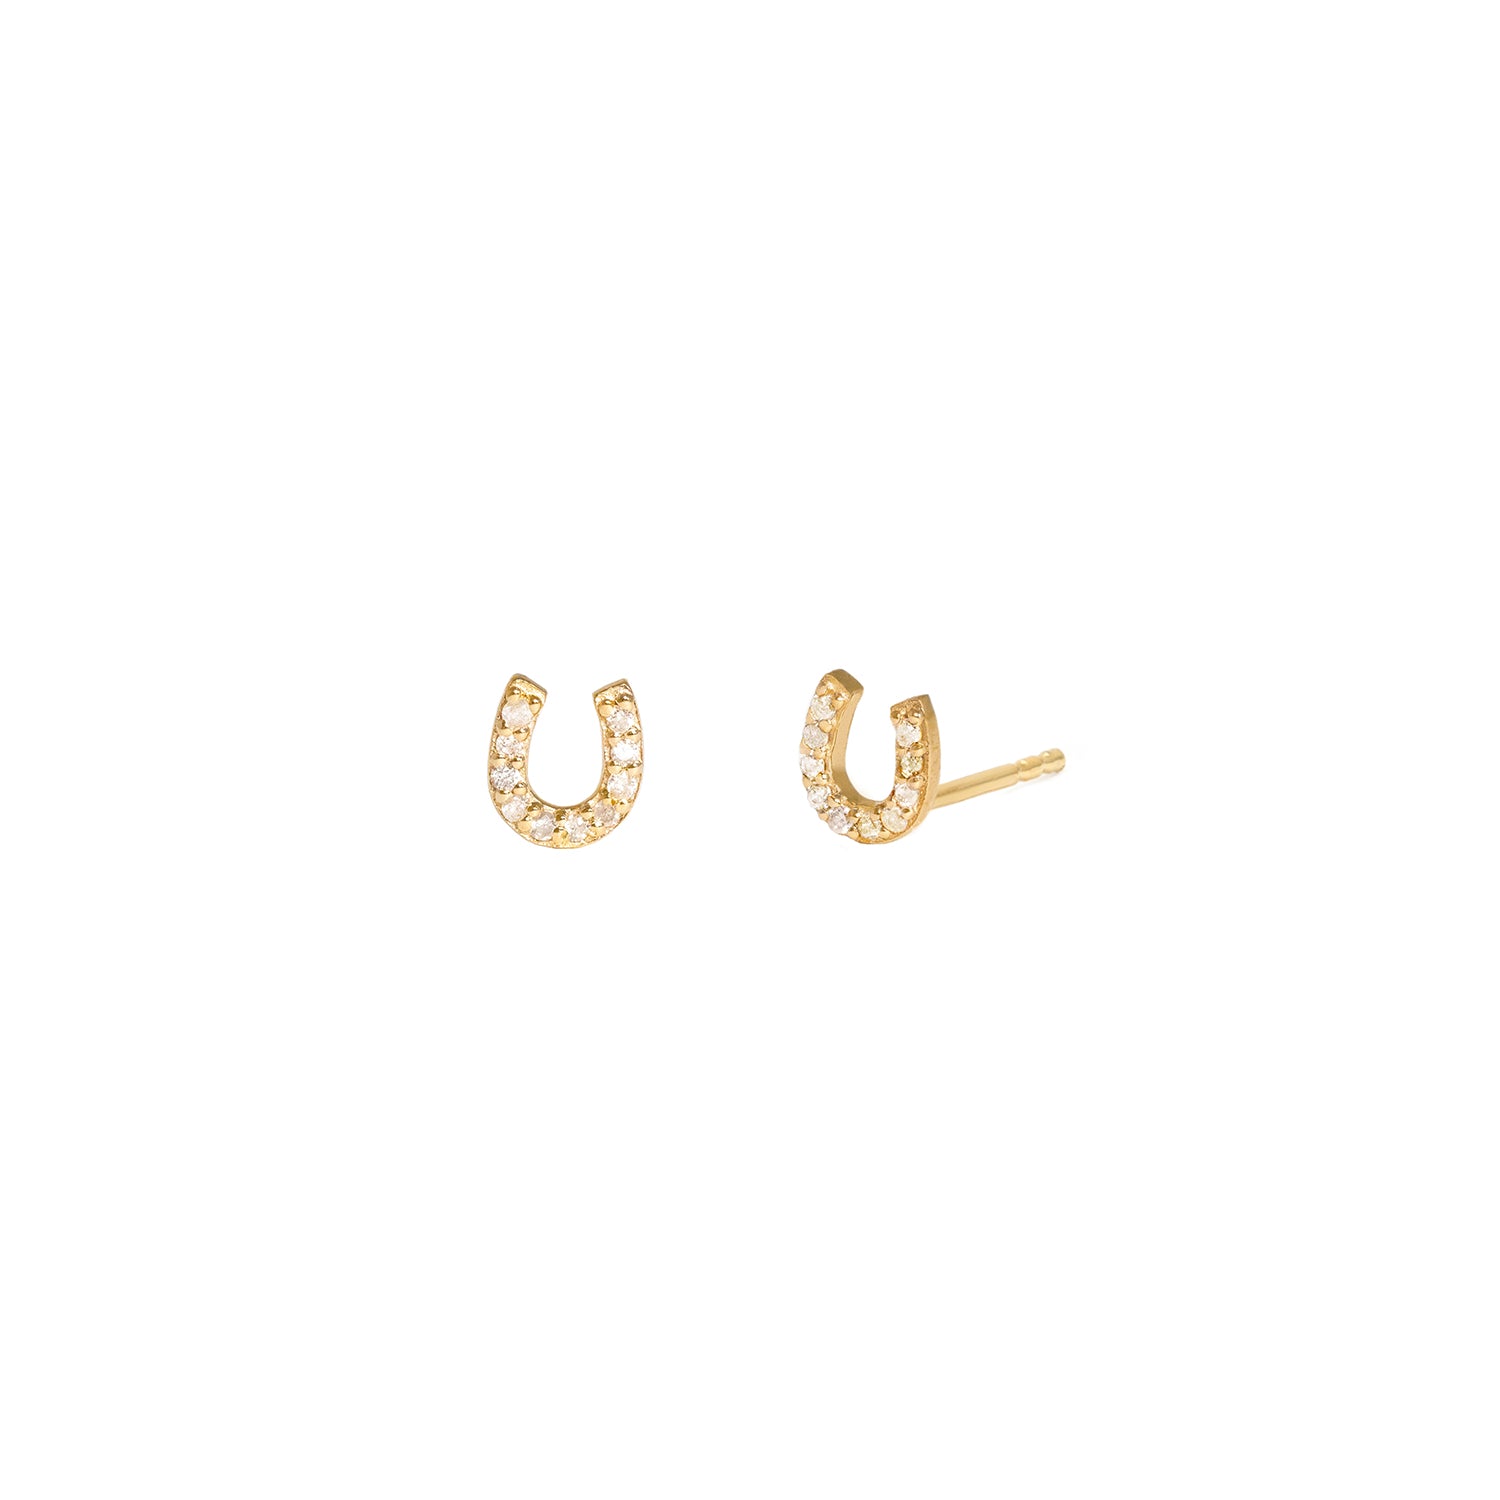 14k Gold Horseshoe Earrings with Diamonds - Show Stable Artisans